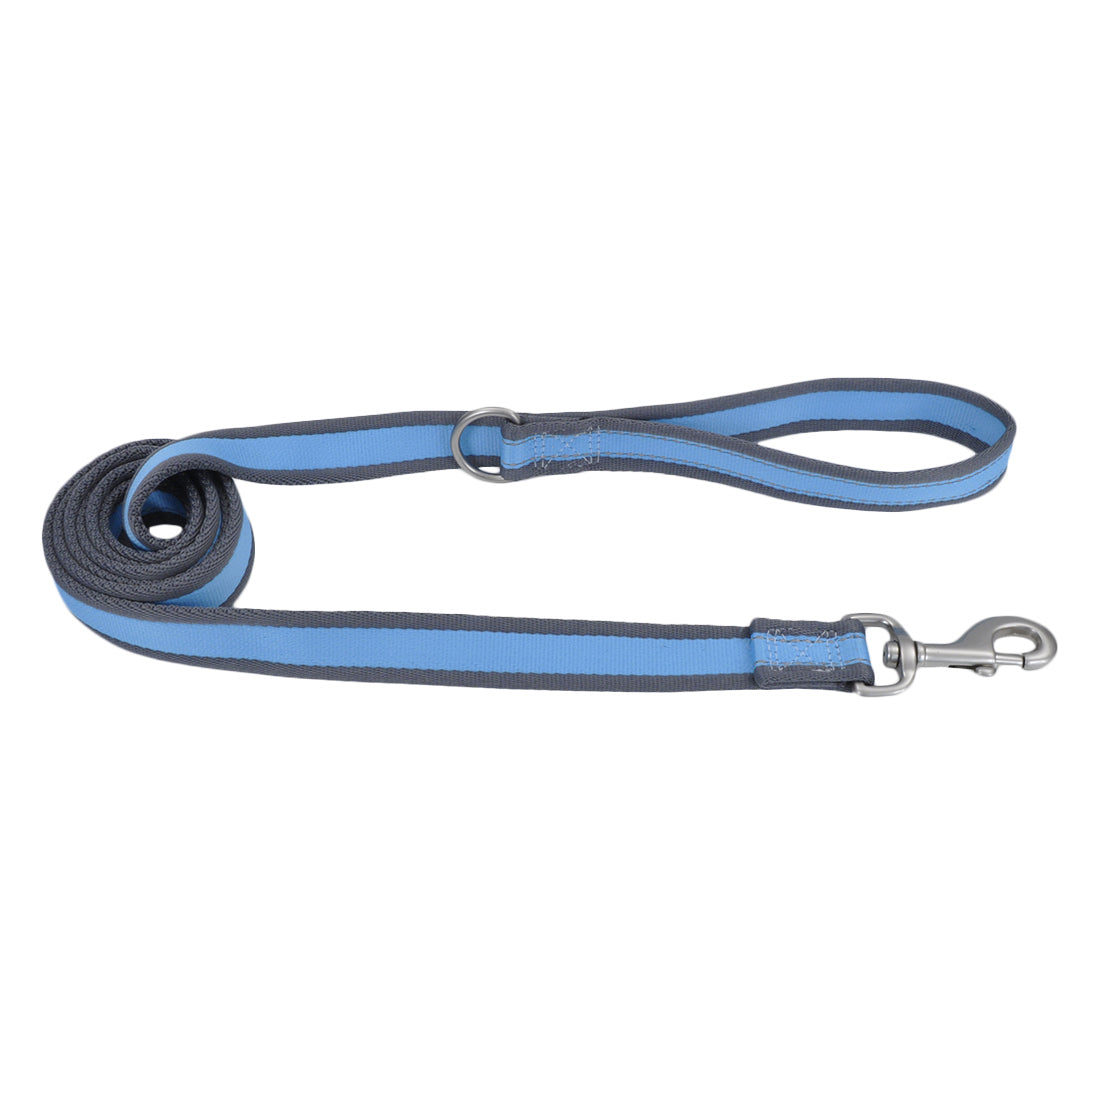 Coastal Pet Attire Pro Reflective Leash 6' - 1" Blue with Gray